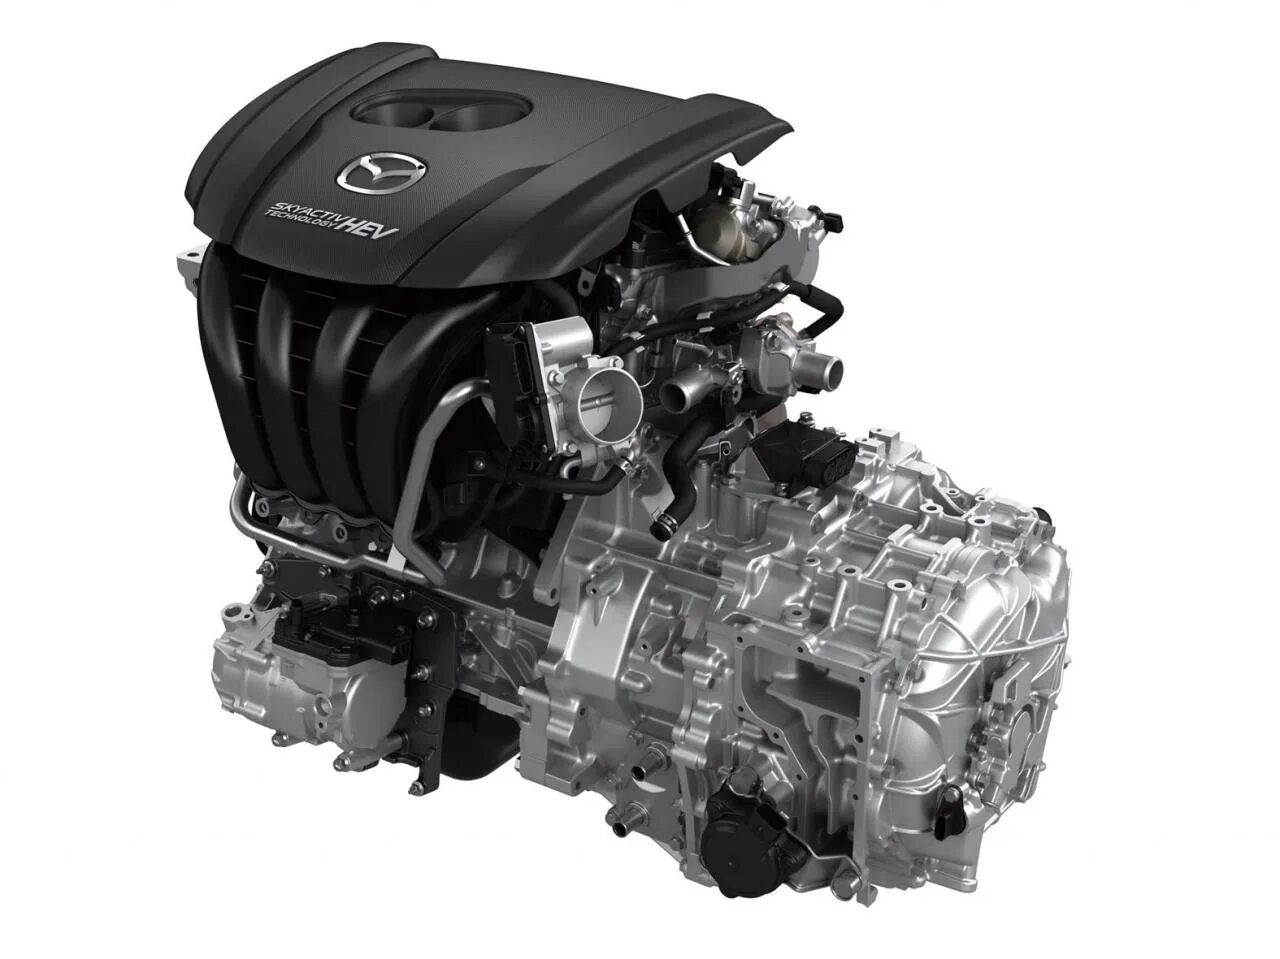 Двигатель мазда сх5 2.0. Двигатель Мазда 6 2.0 скайактив. Двигатель Мазда 2.5 скайактив. Двигатель Мазда SKYACTIV 2.0. Мотор Mazda 6 Skyactive.